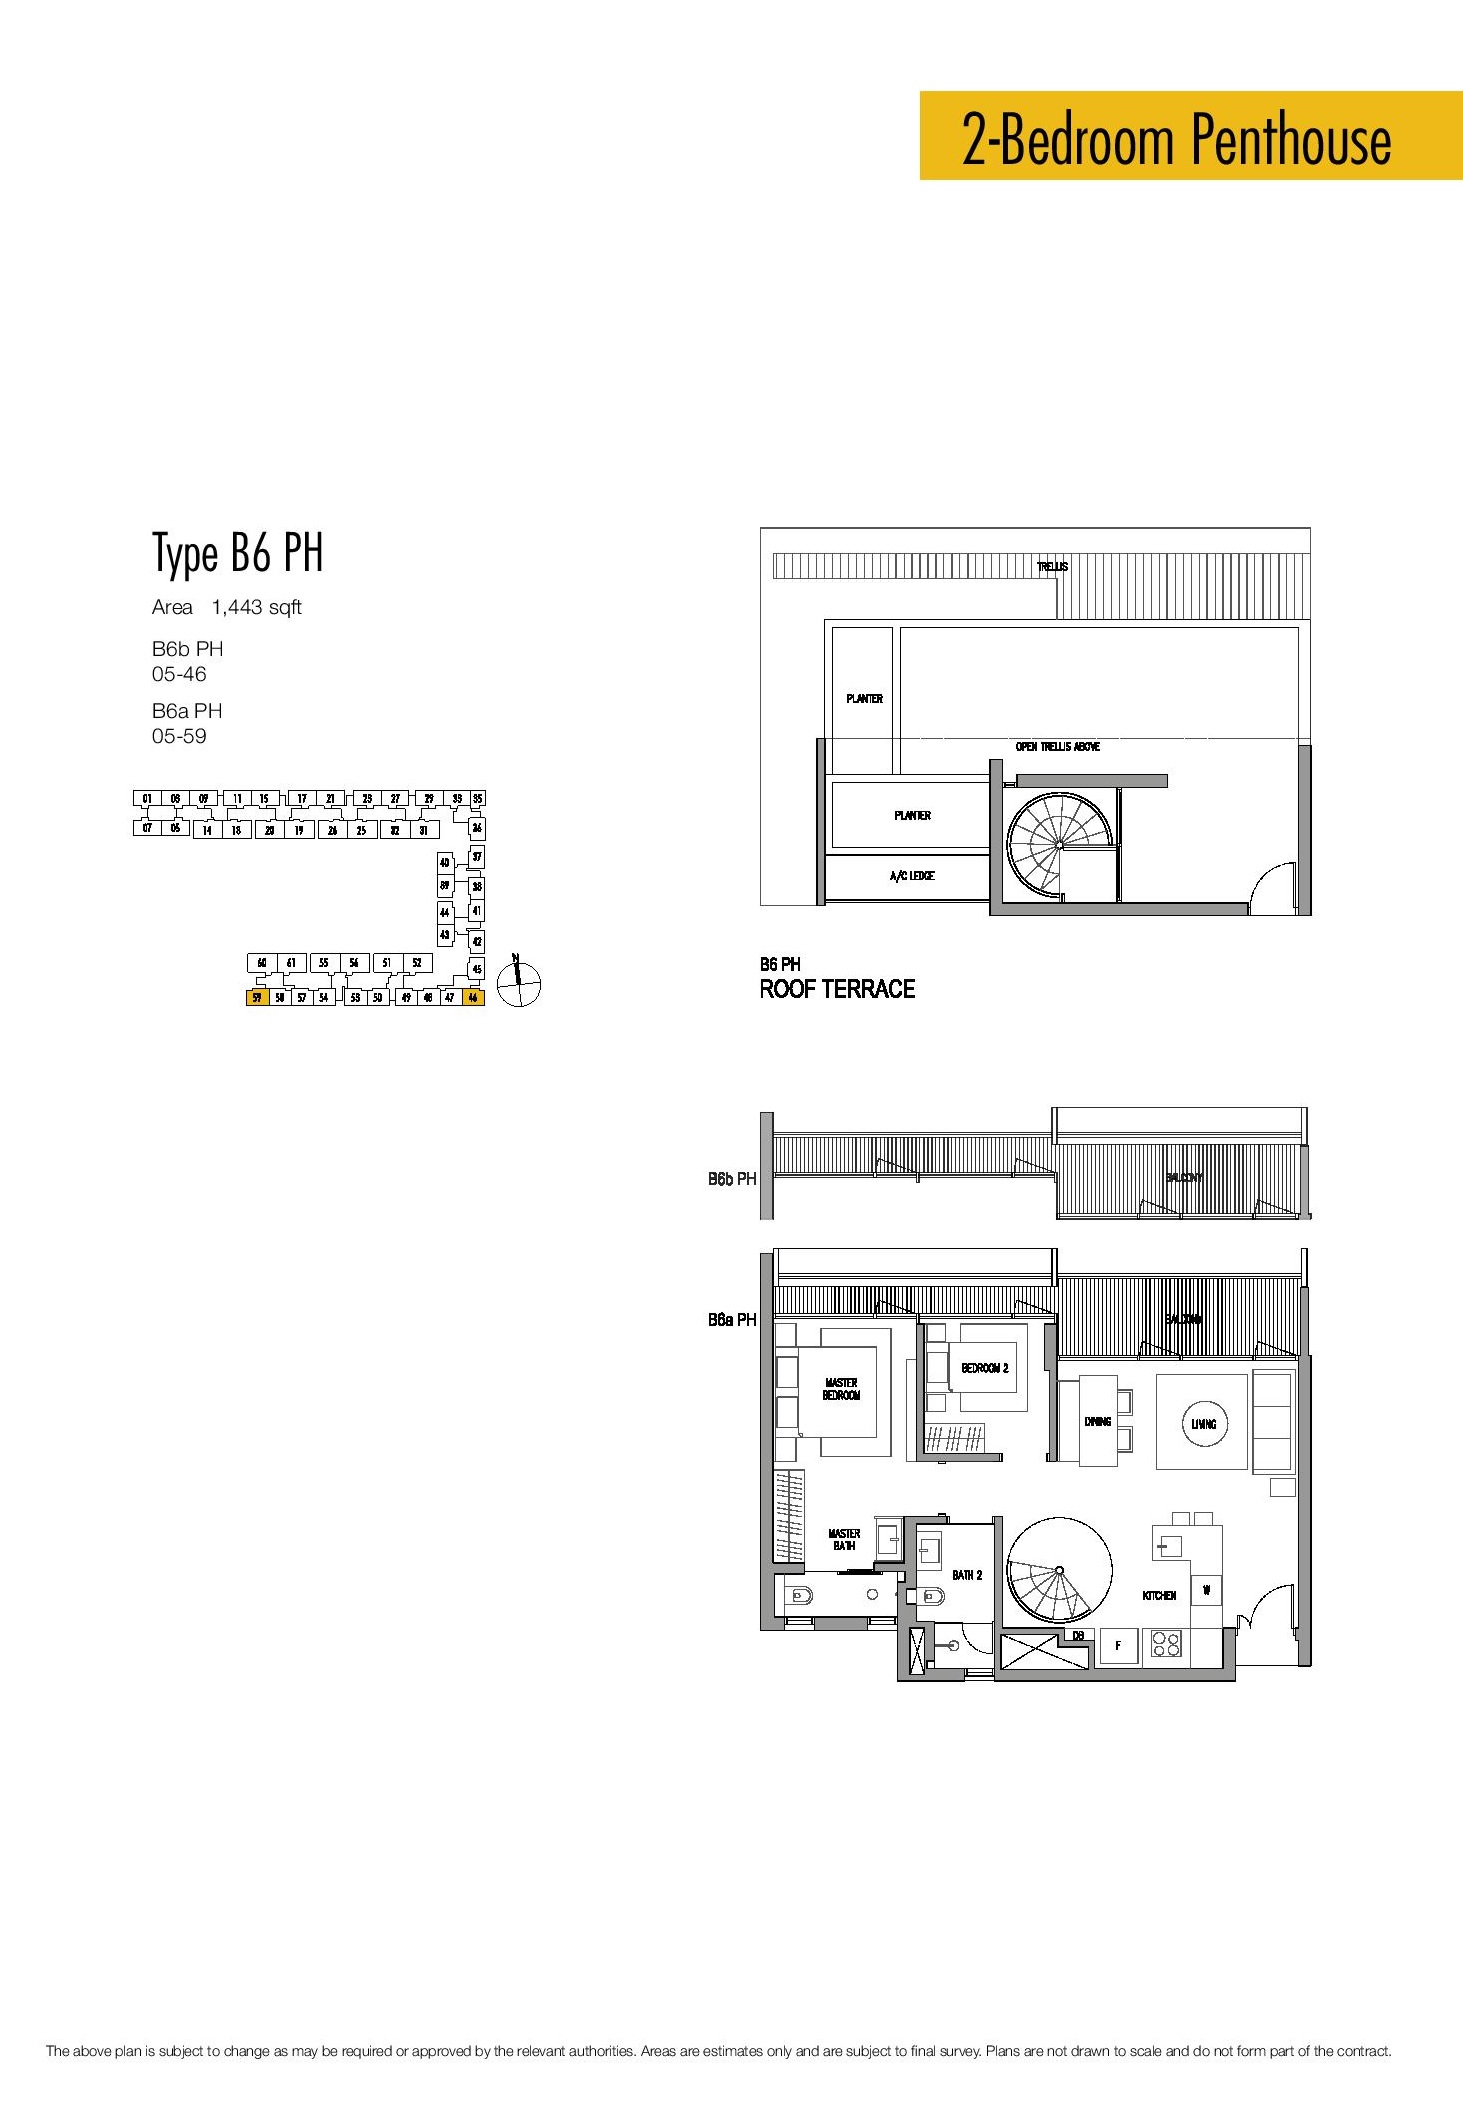 Seletar Park Residence 2 Bedroom Penthouse Type B6 PH Floor Plans